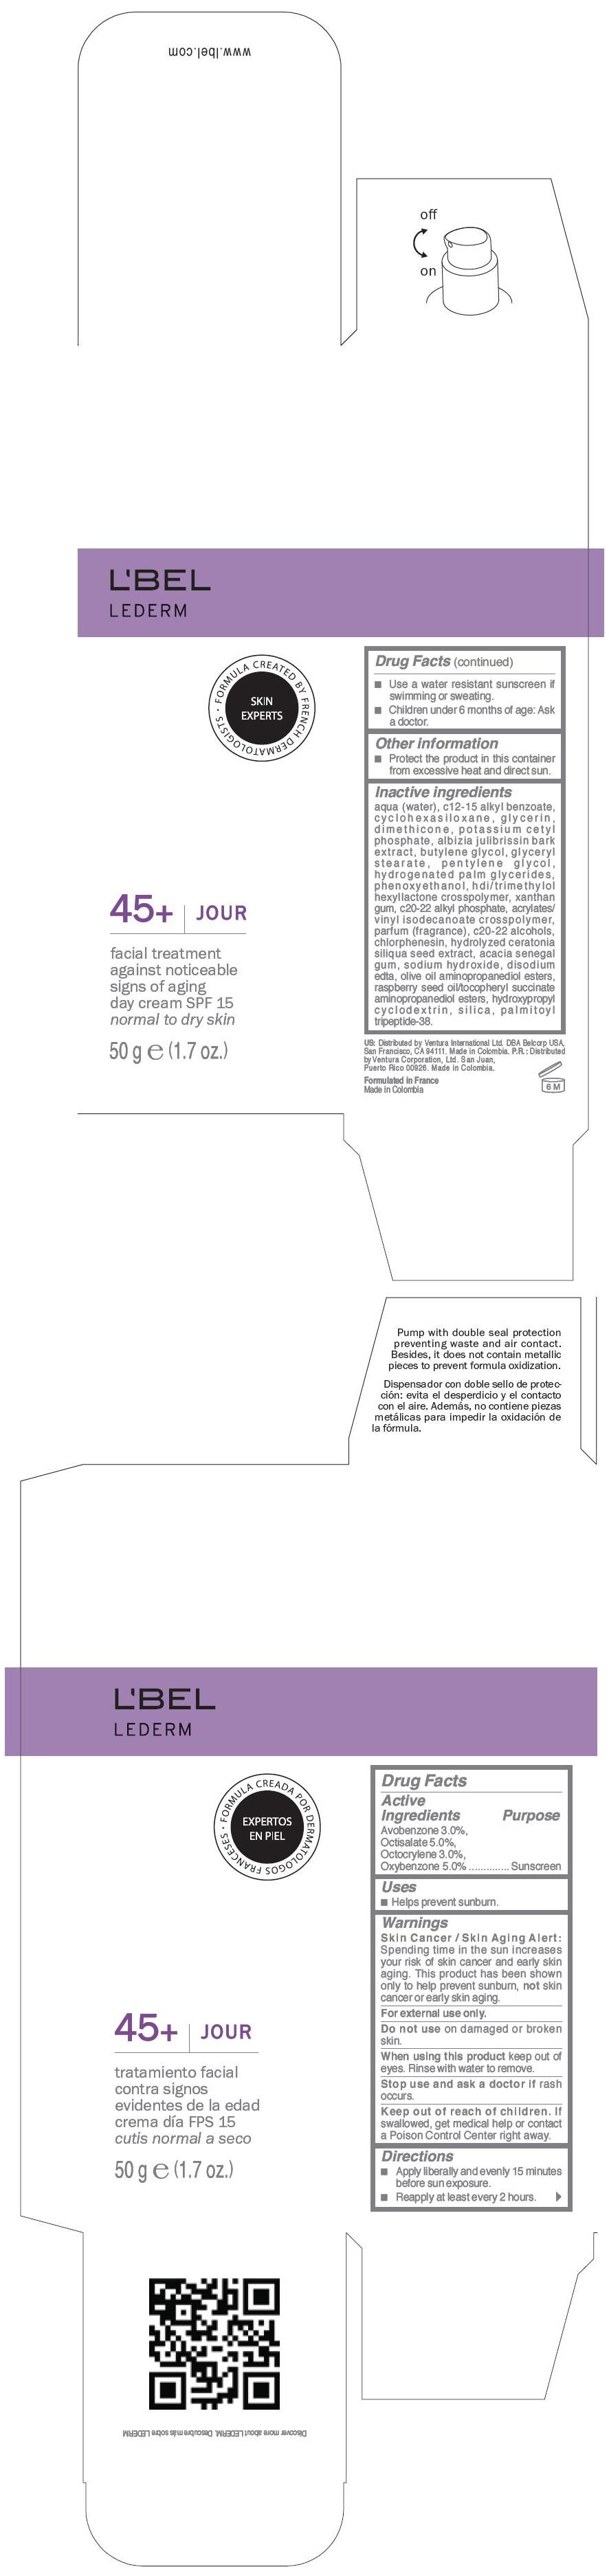 PRINCIPAL DISPLAY PANEL - 50 g Bottle Carton